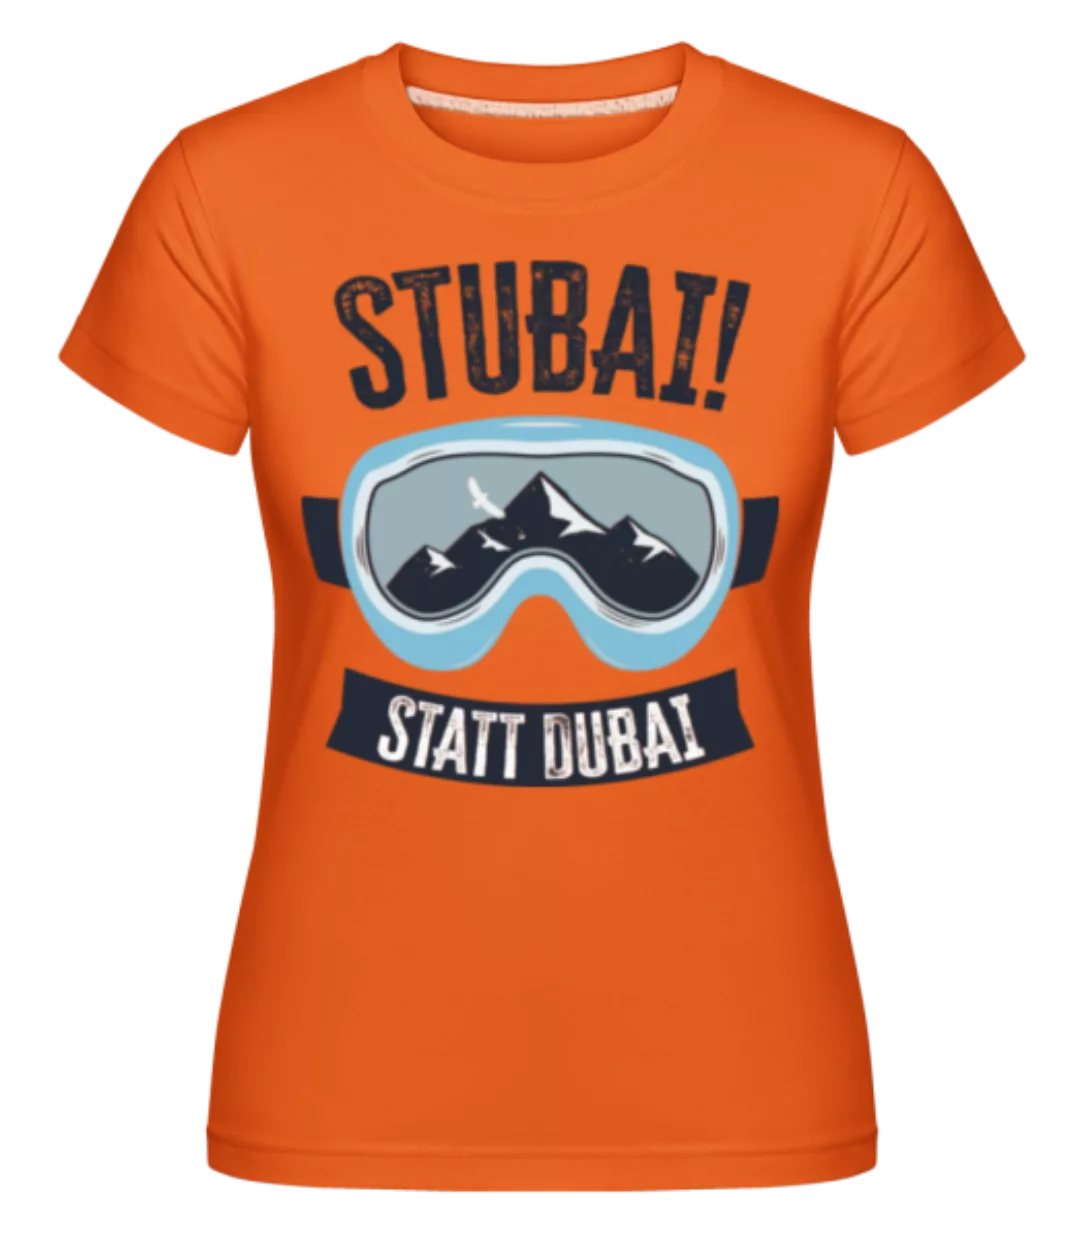 Stubai Statt Dubai · Shirtinator Frauen T-Shirt günstig online kaufen